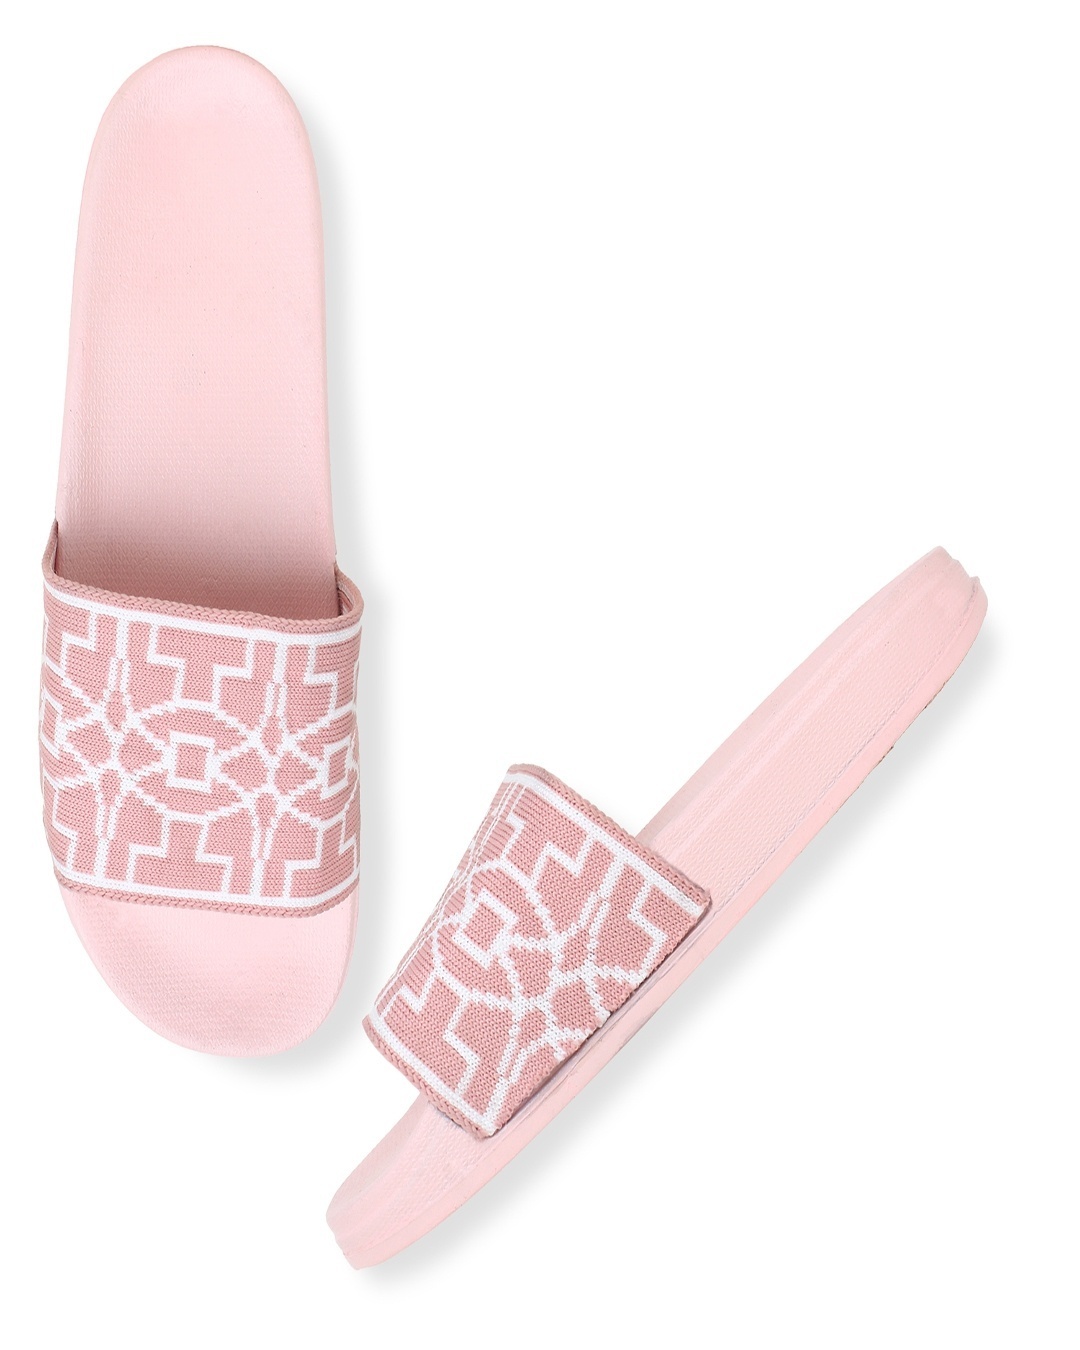 Shop Women's Pink & White Printed Sliders